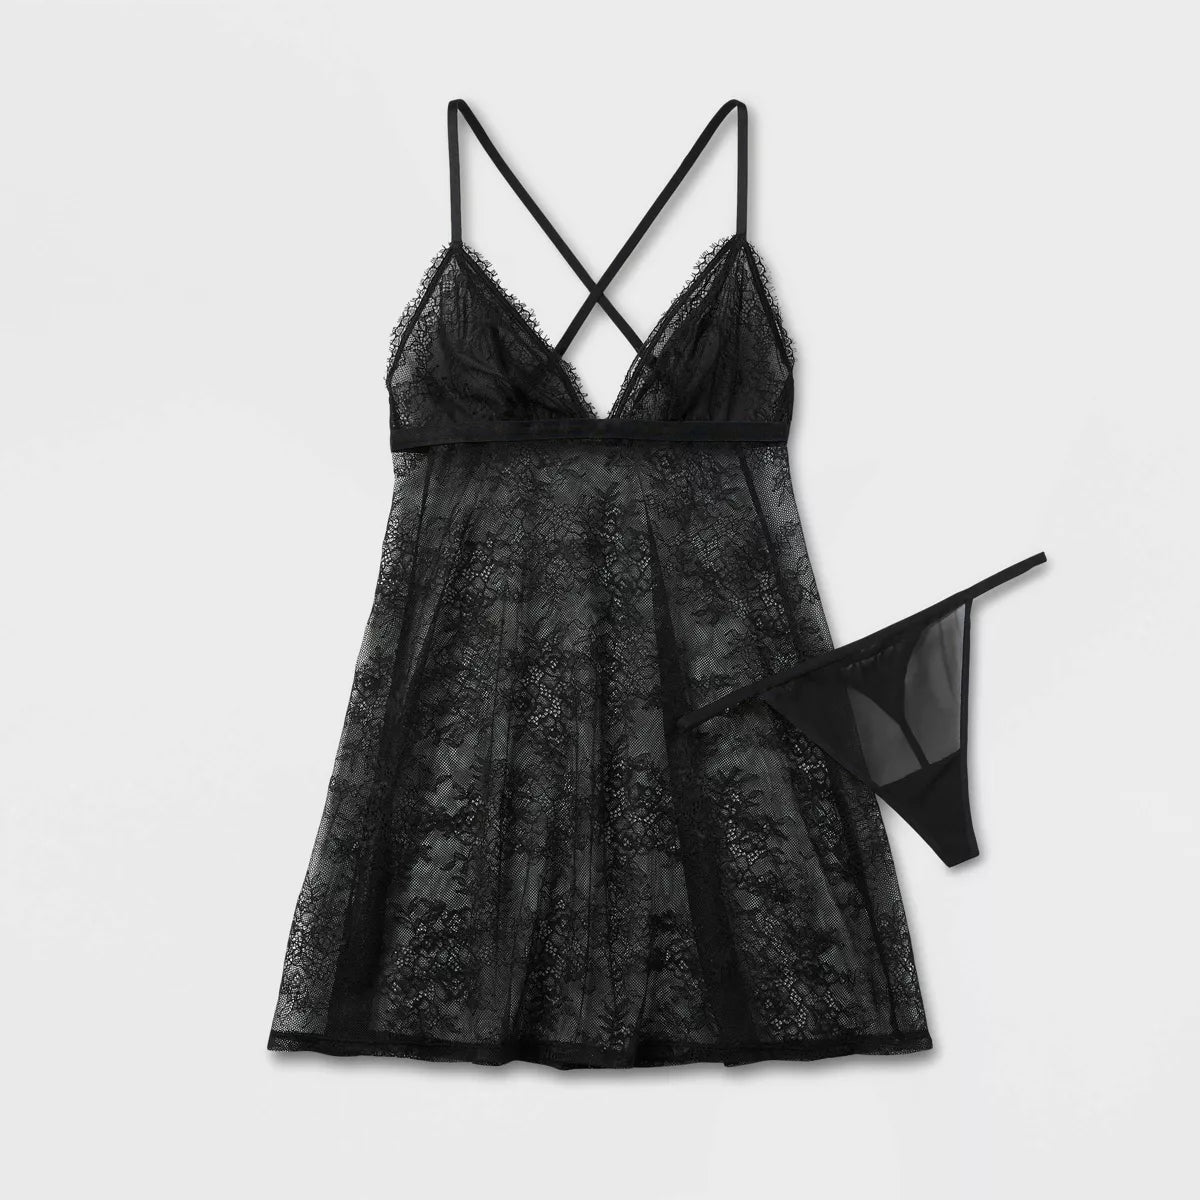 Elegant Black Lace Lingerie Dress